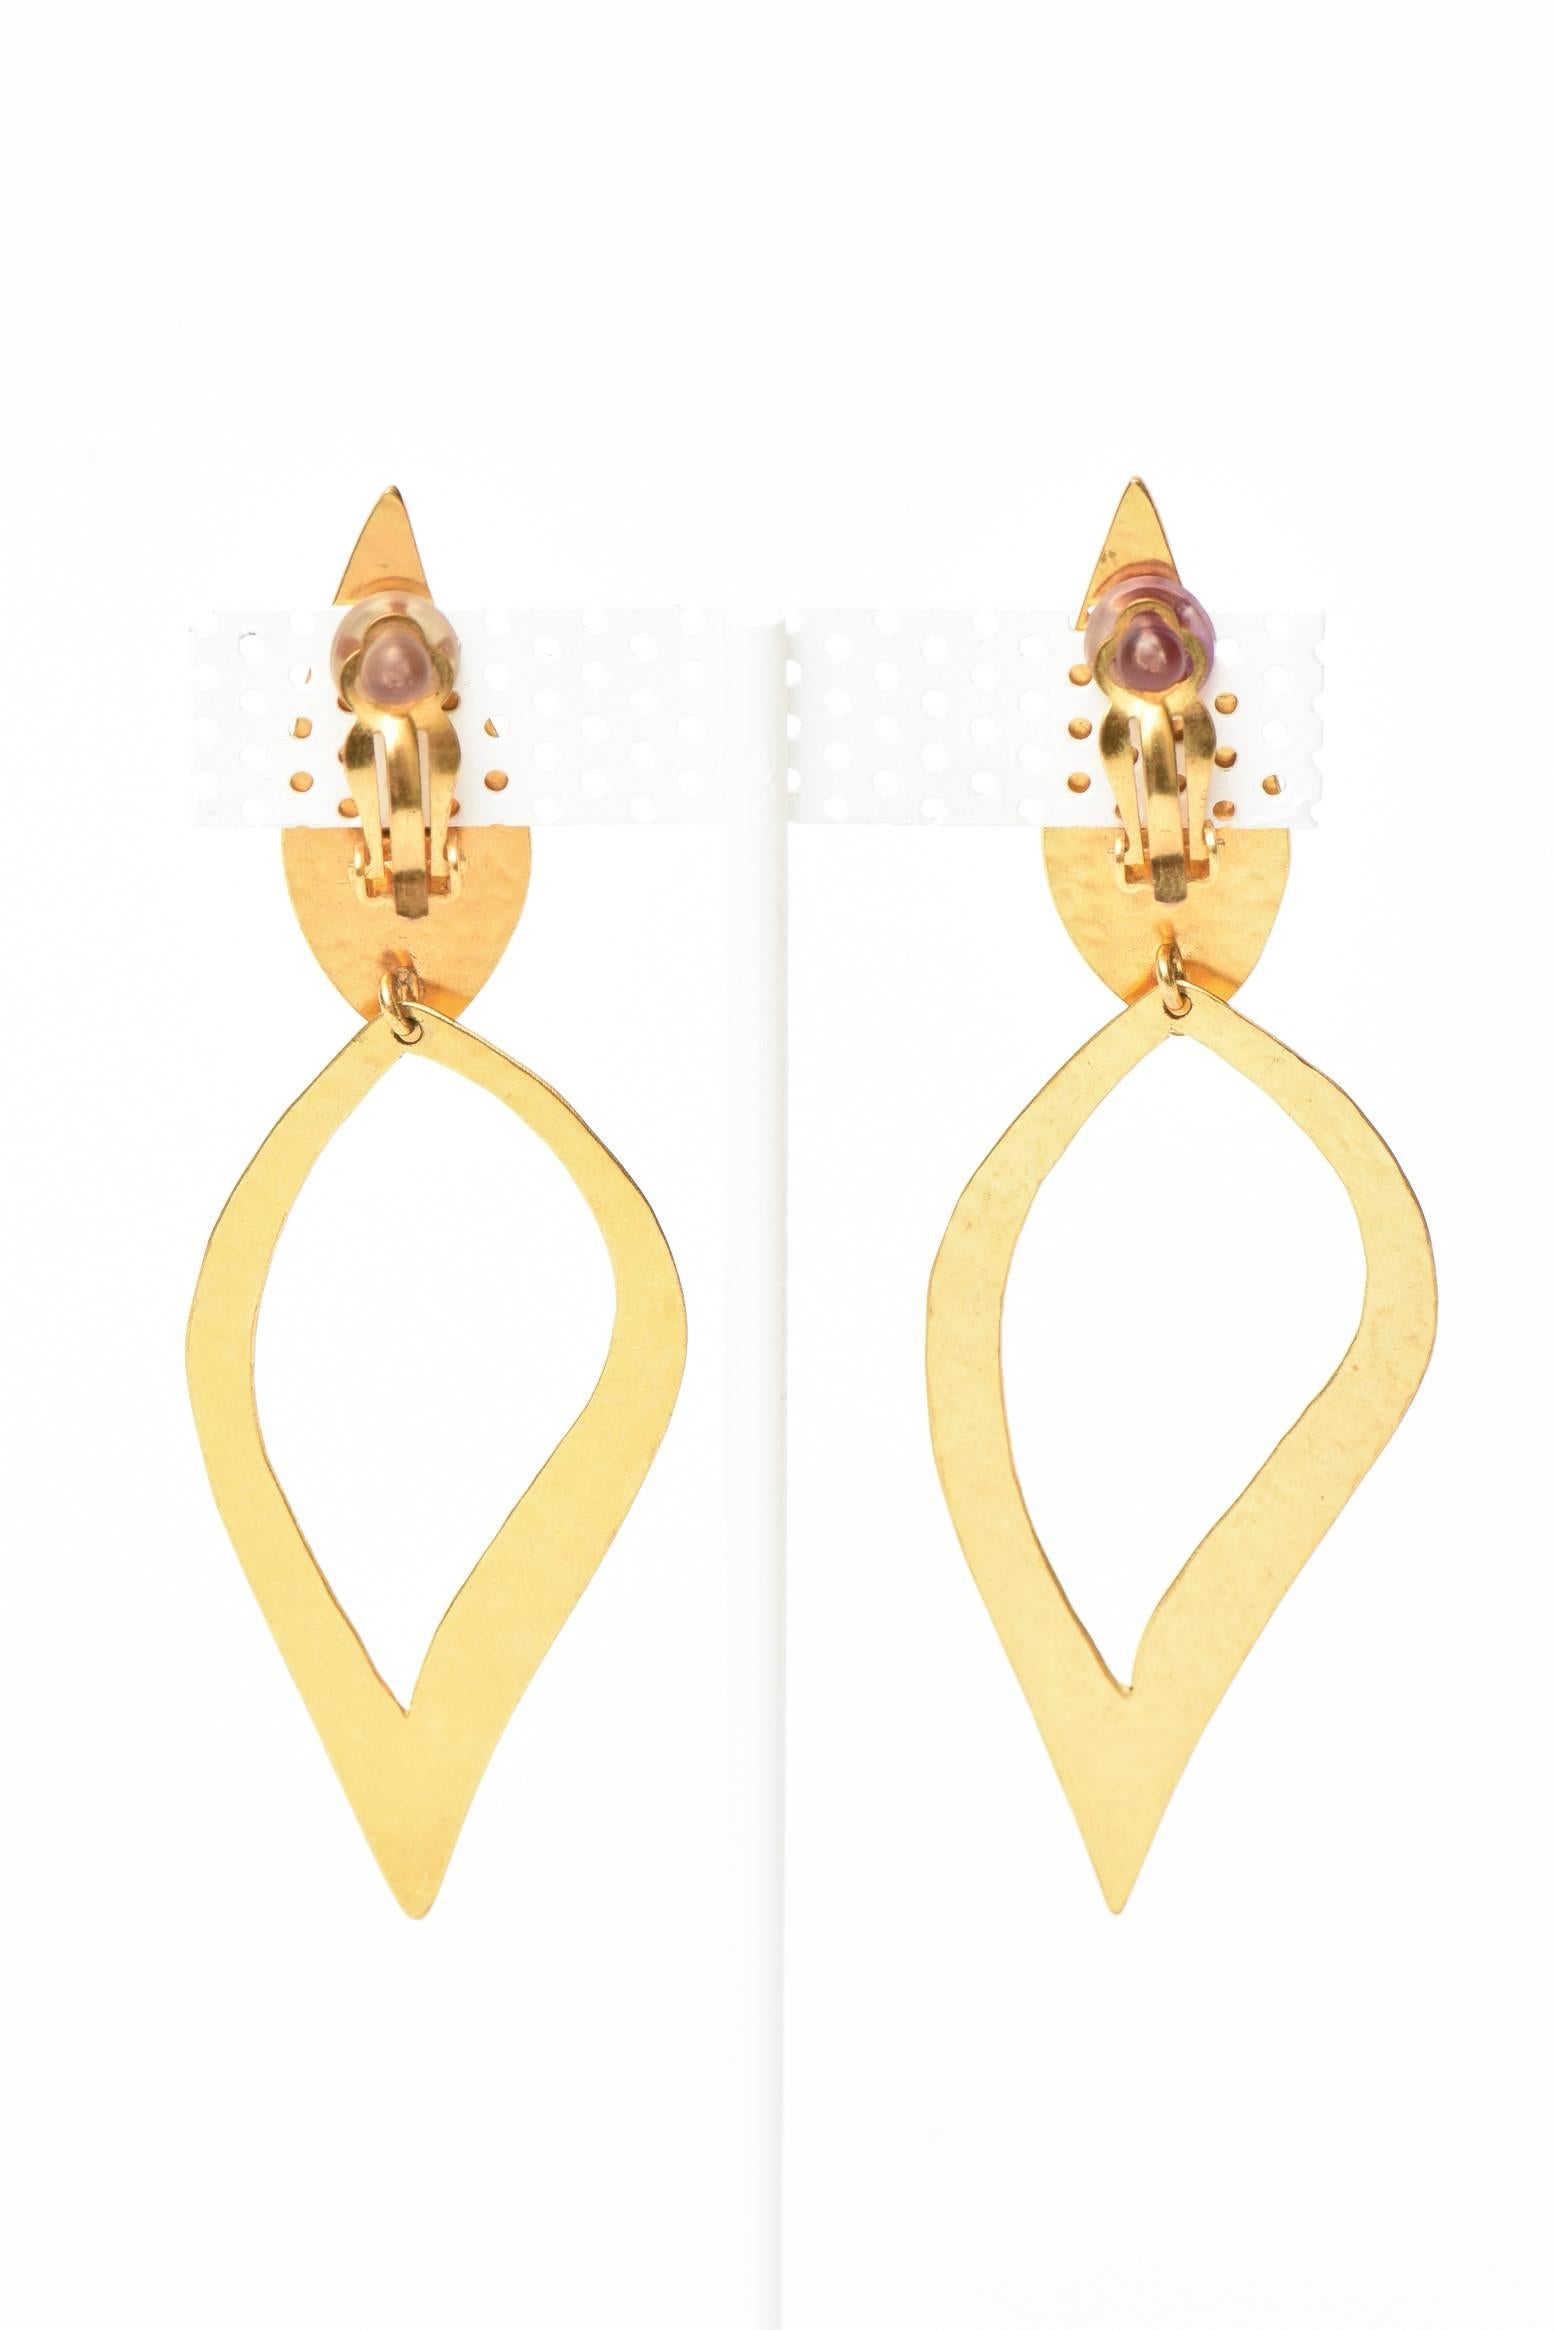 Herve Van Der Straeten Pair of Sculptural Gold Plated Hallmarked Earrings 1